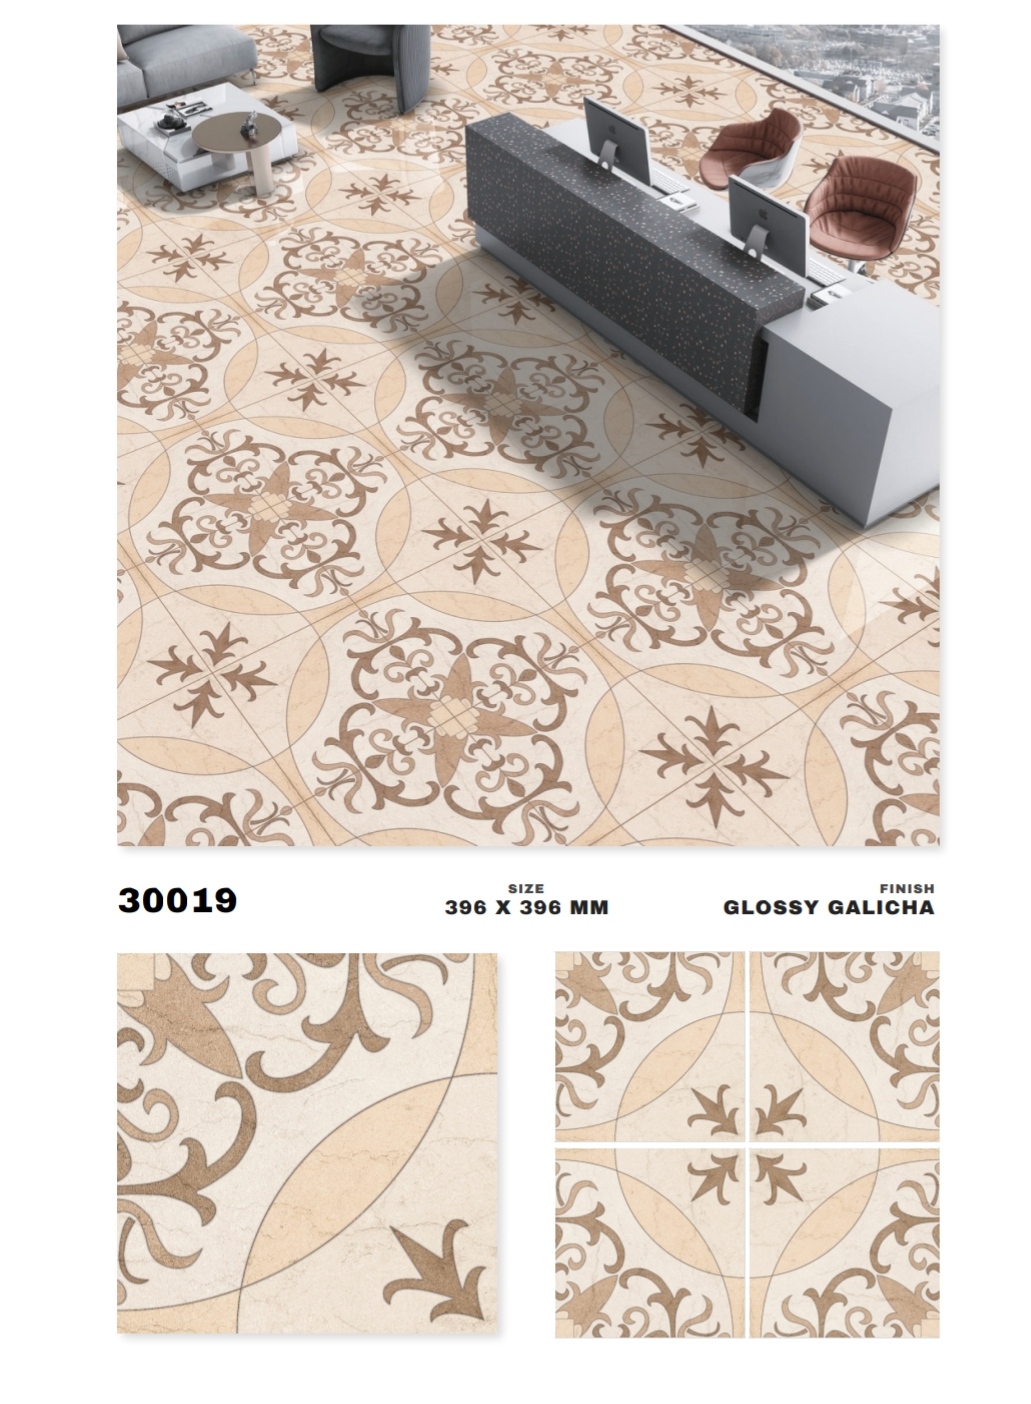 Floor tiles from BRAND CERAMICA